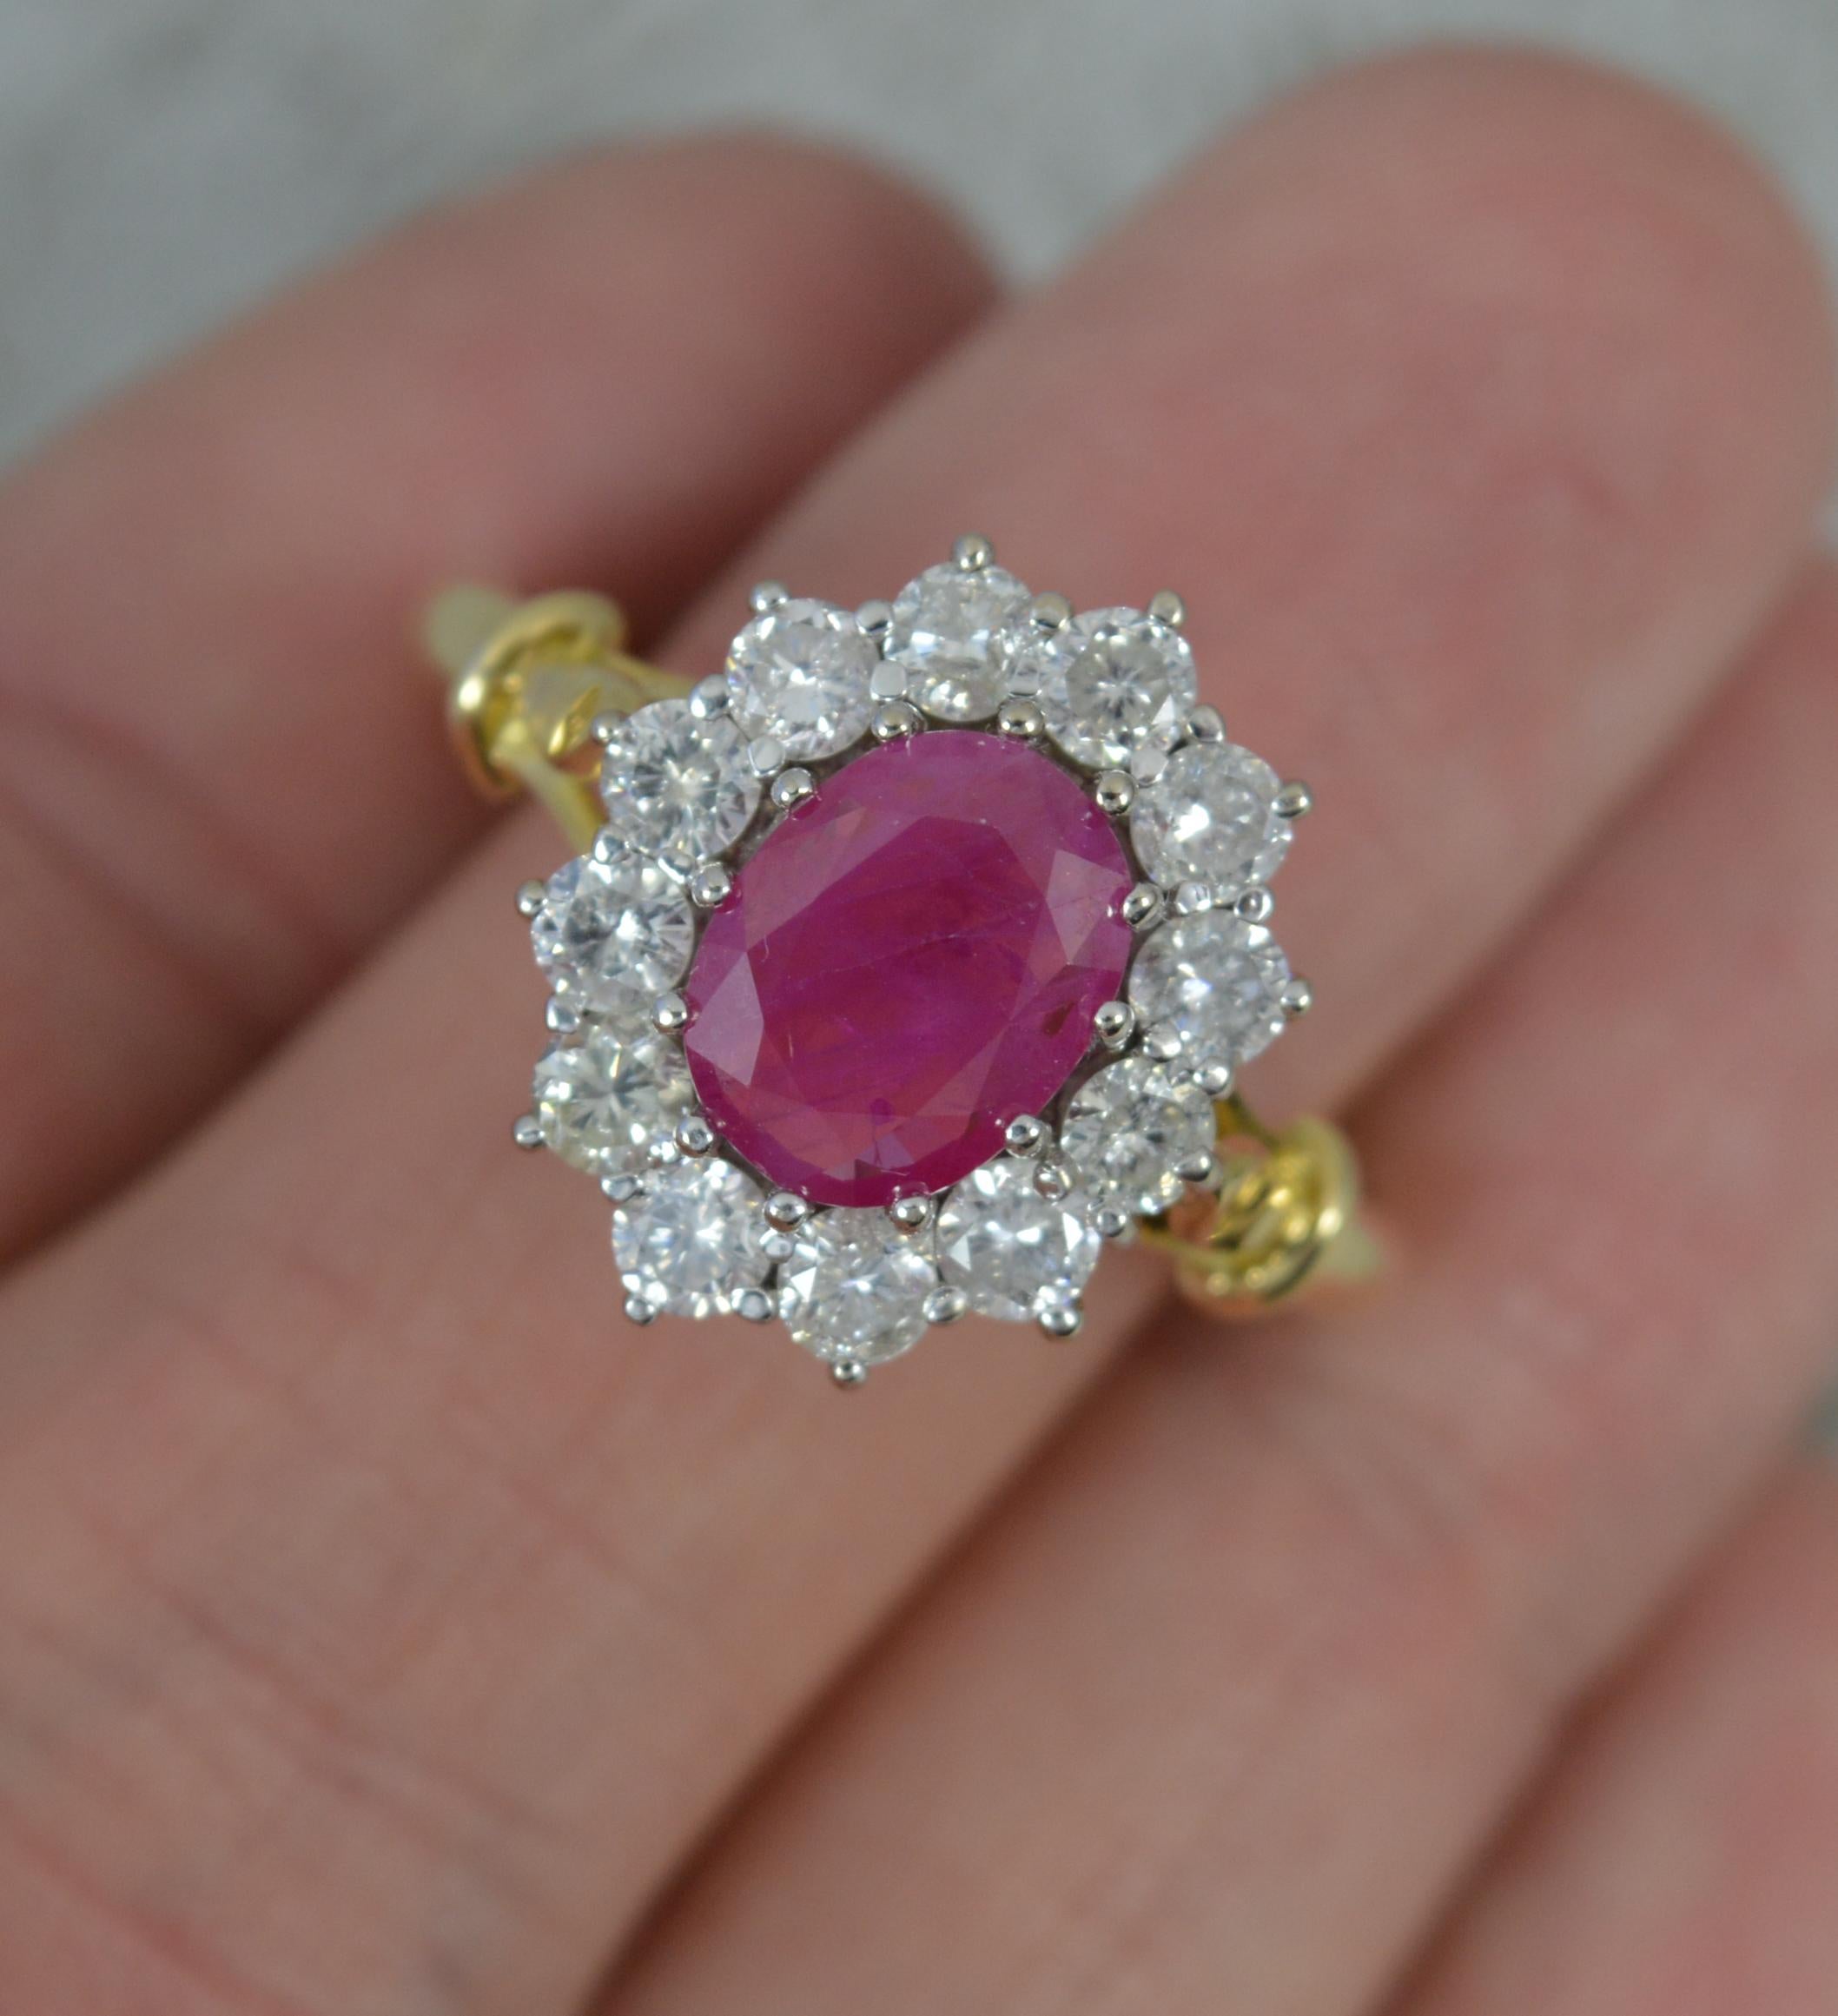 1.8 carat diamond ring